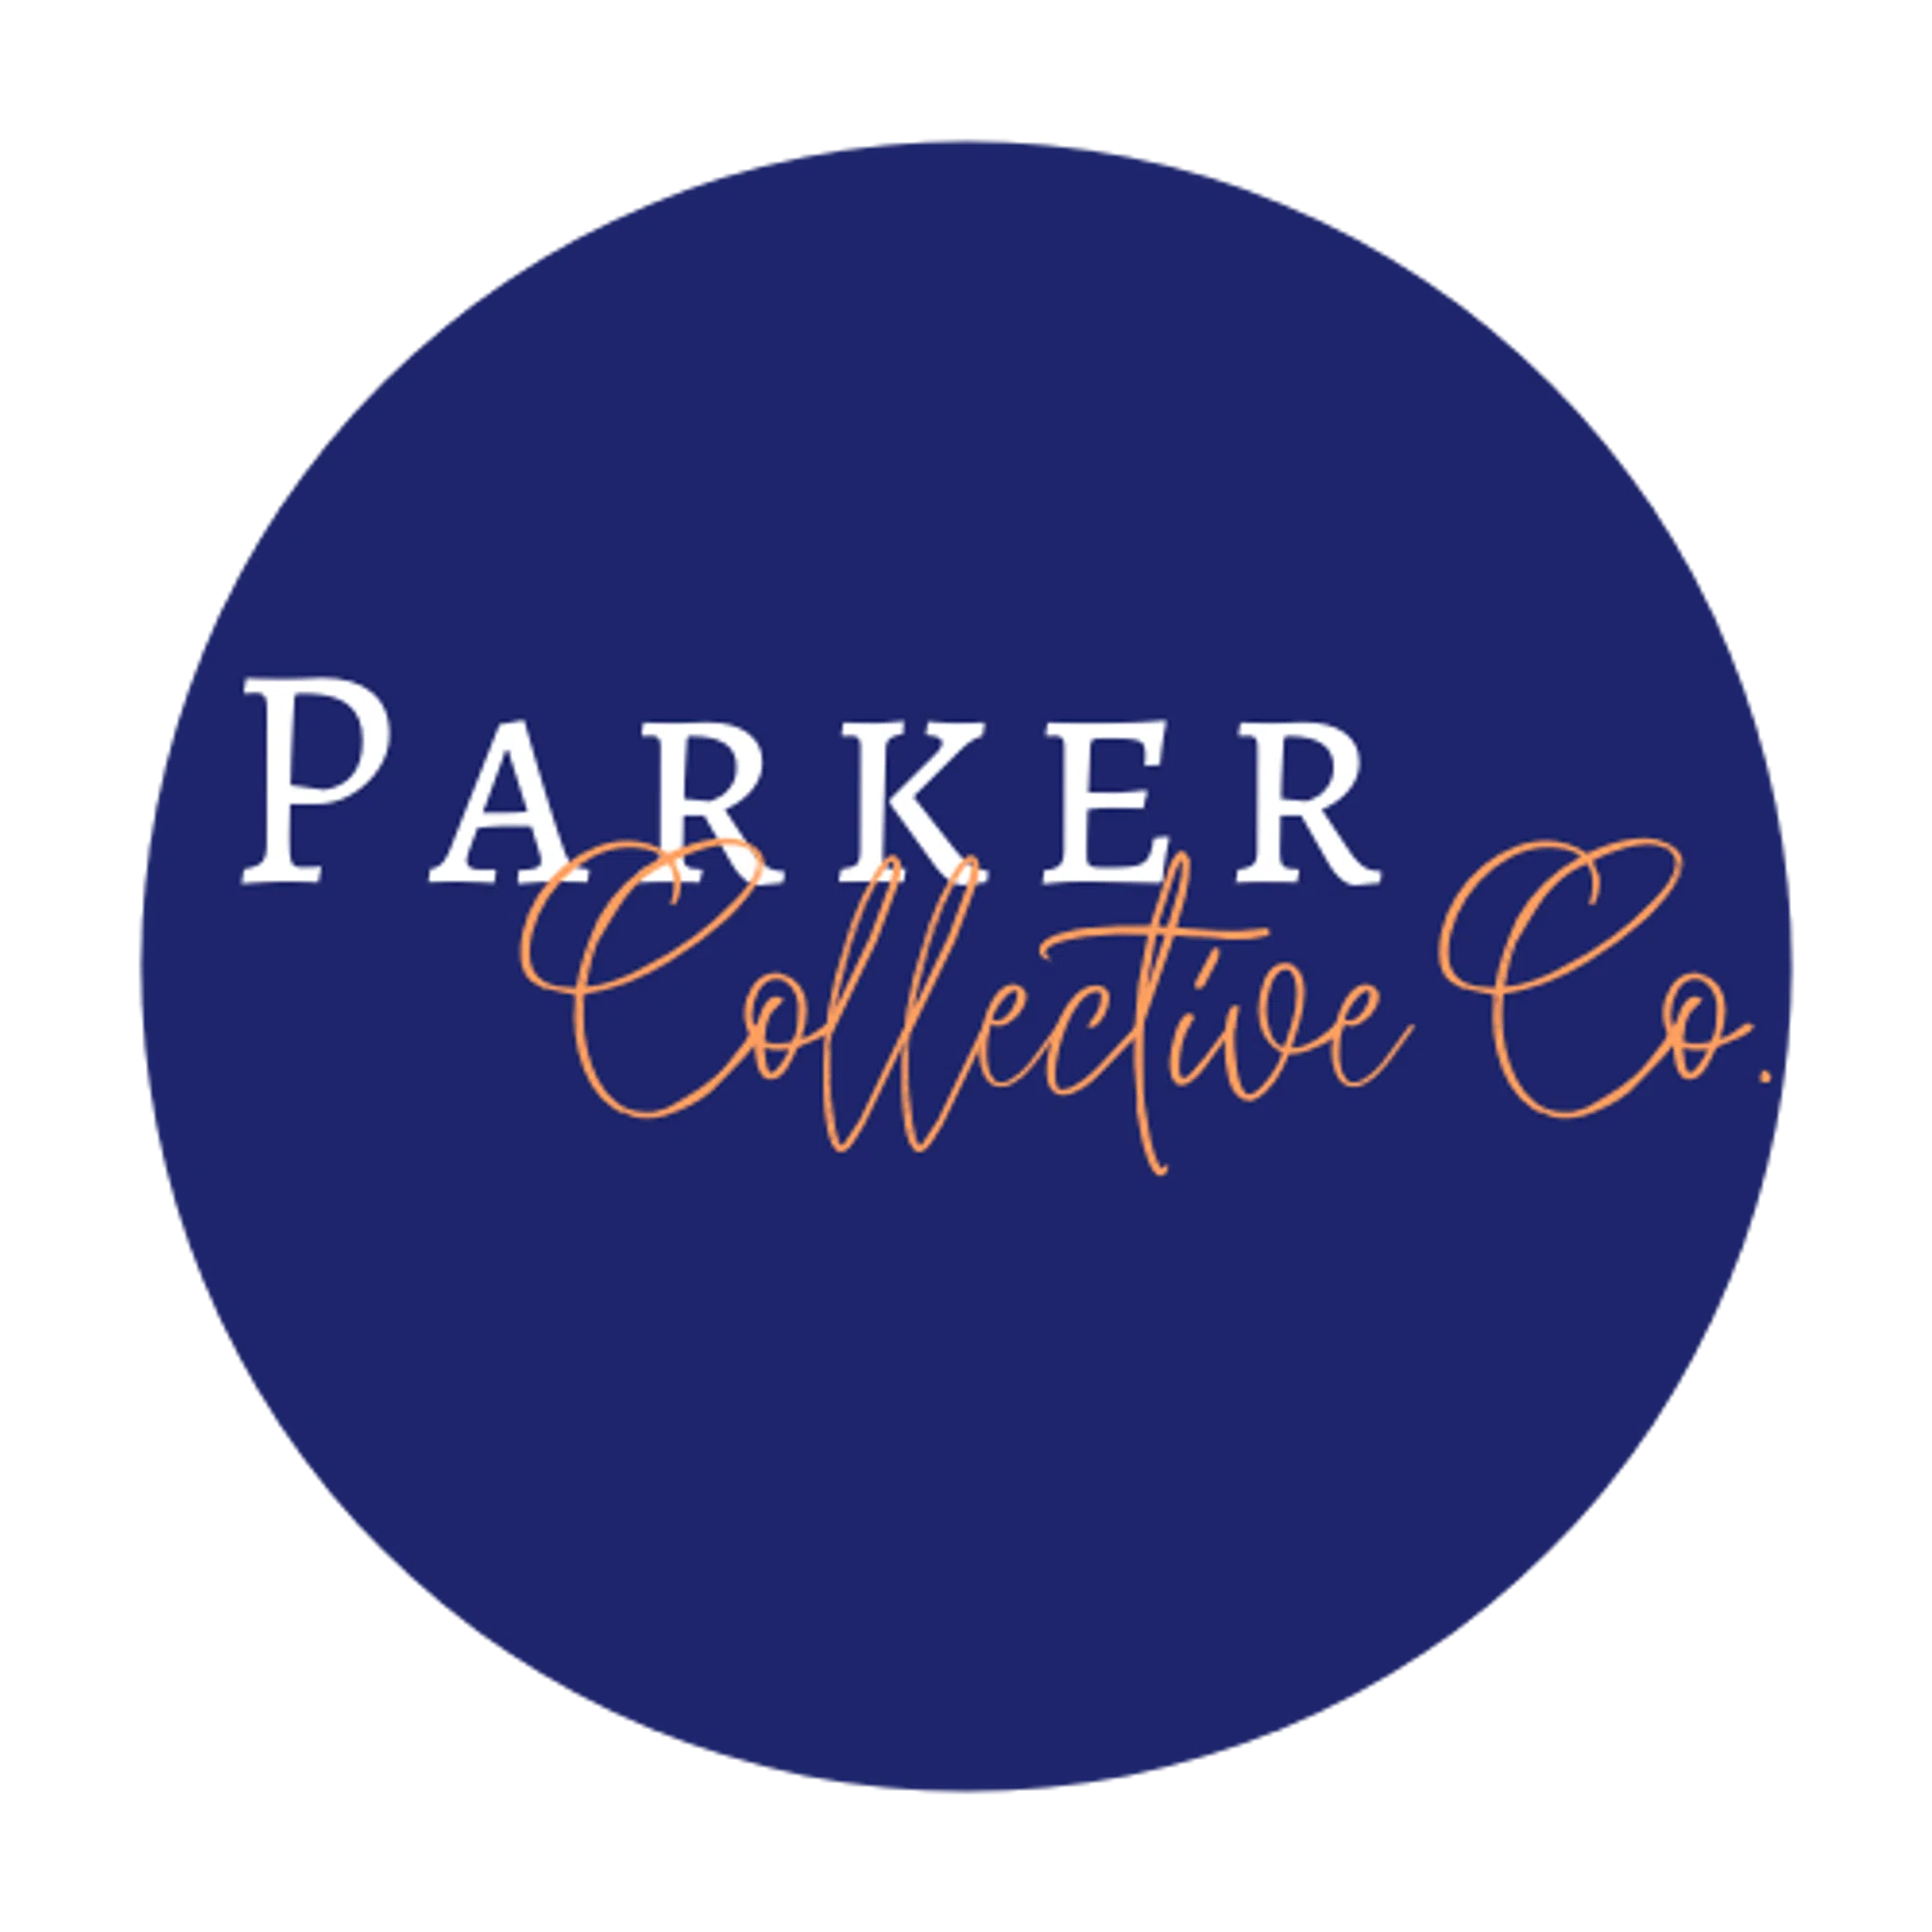 Parker Collective Co